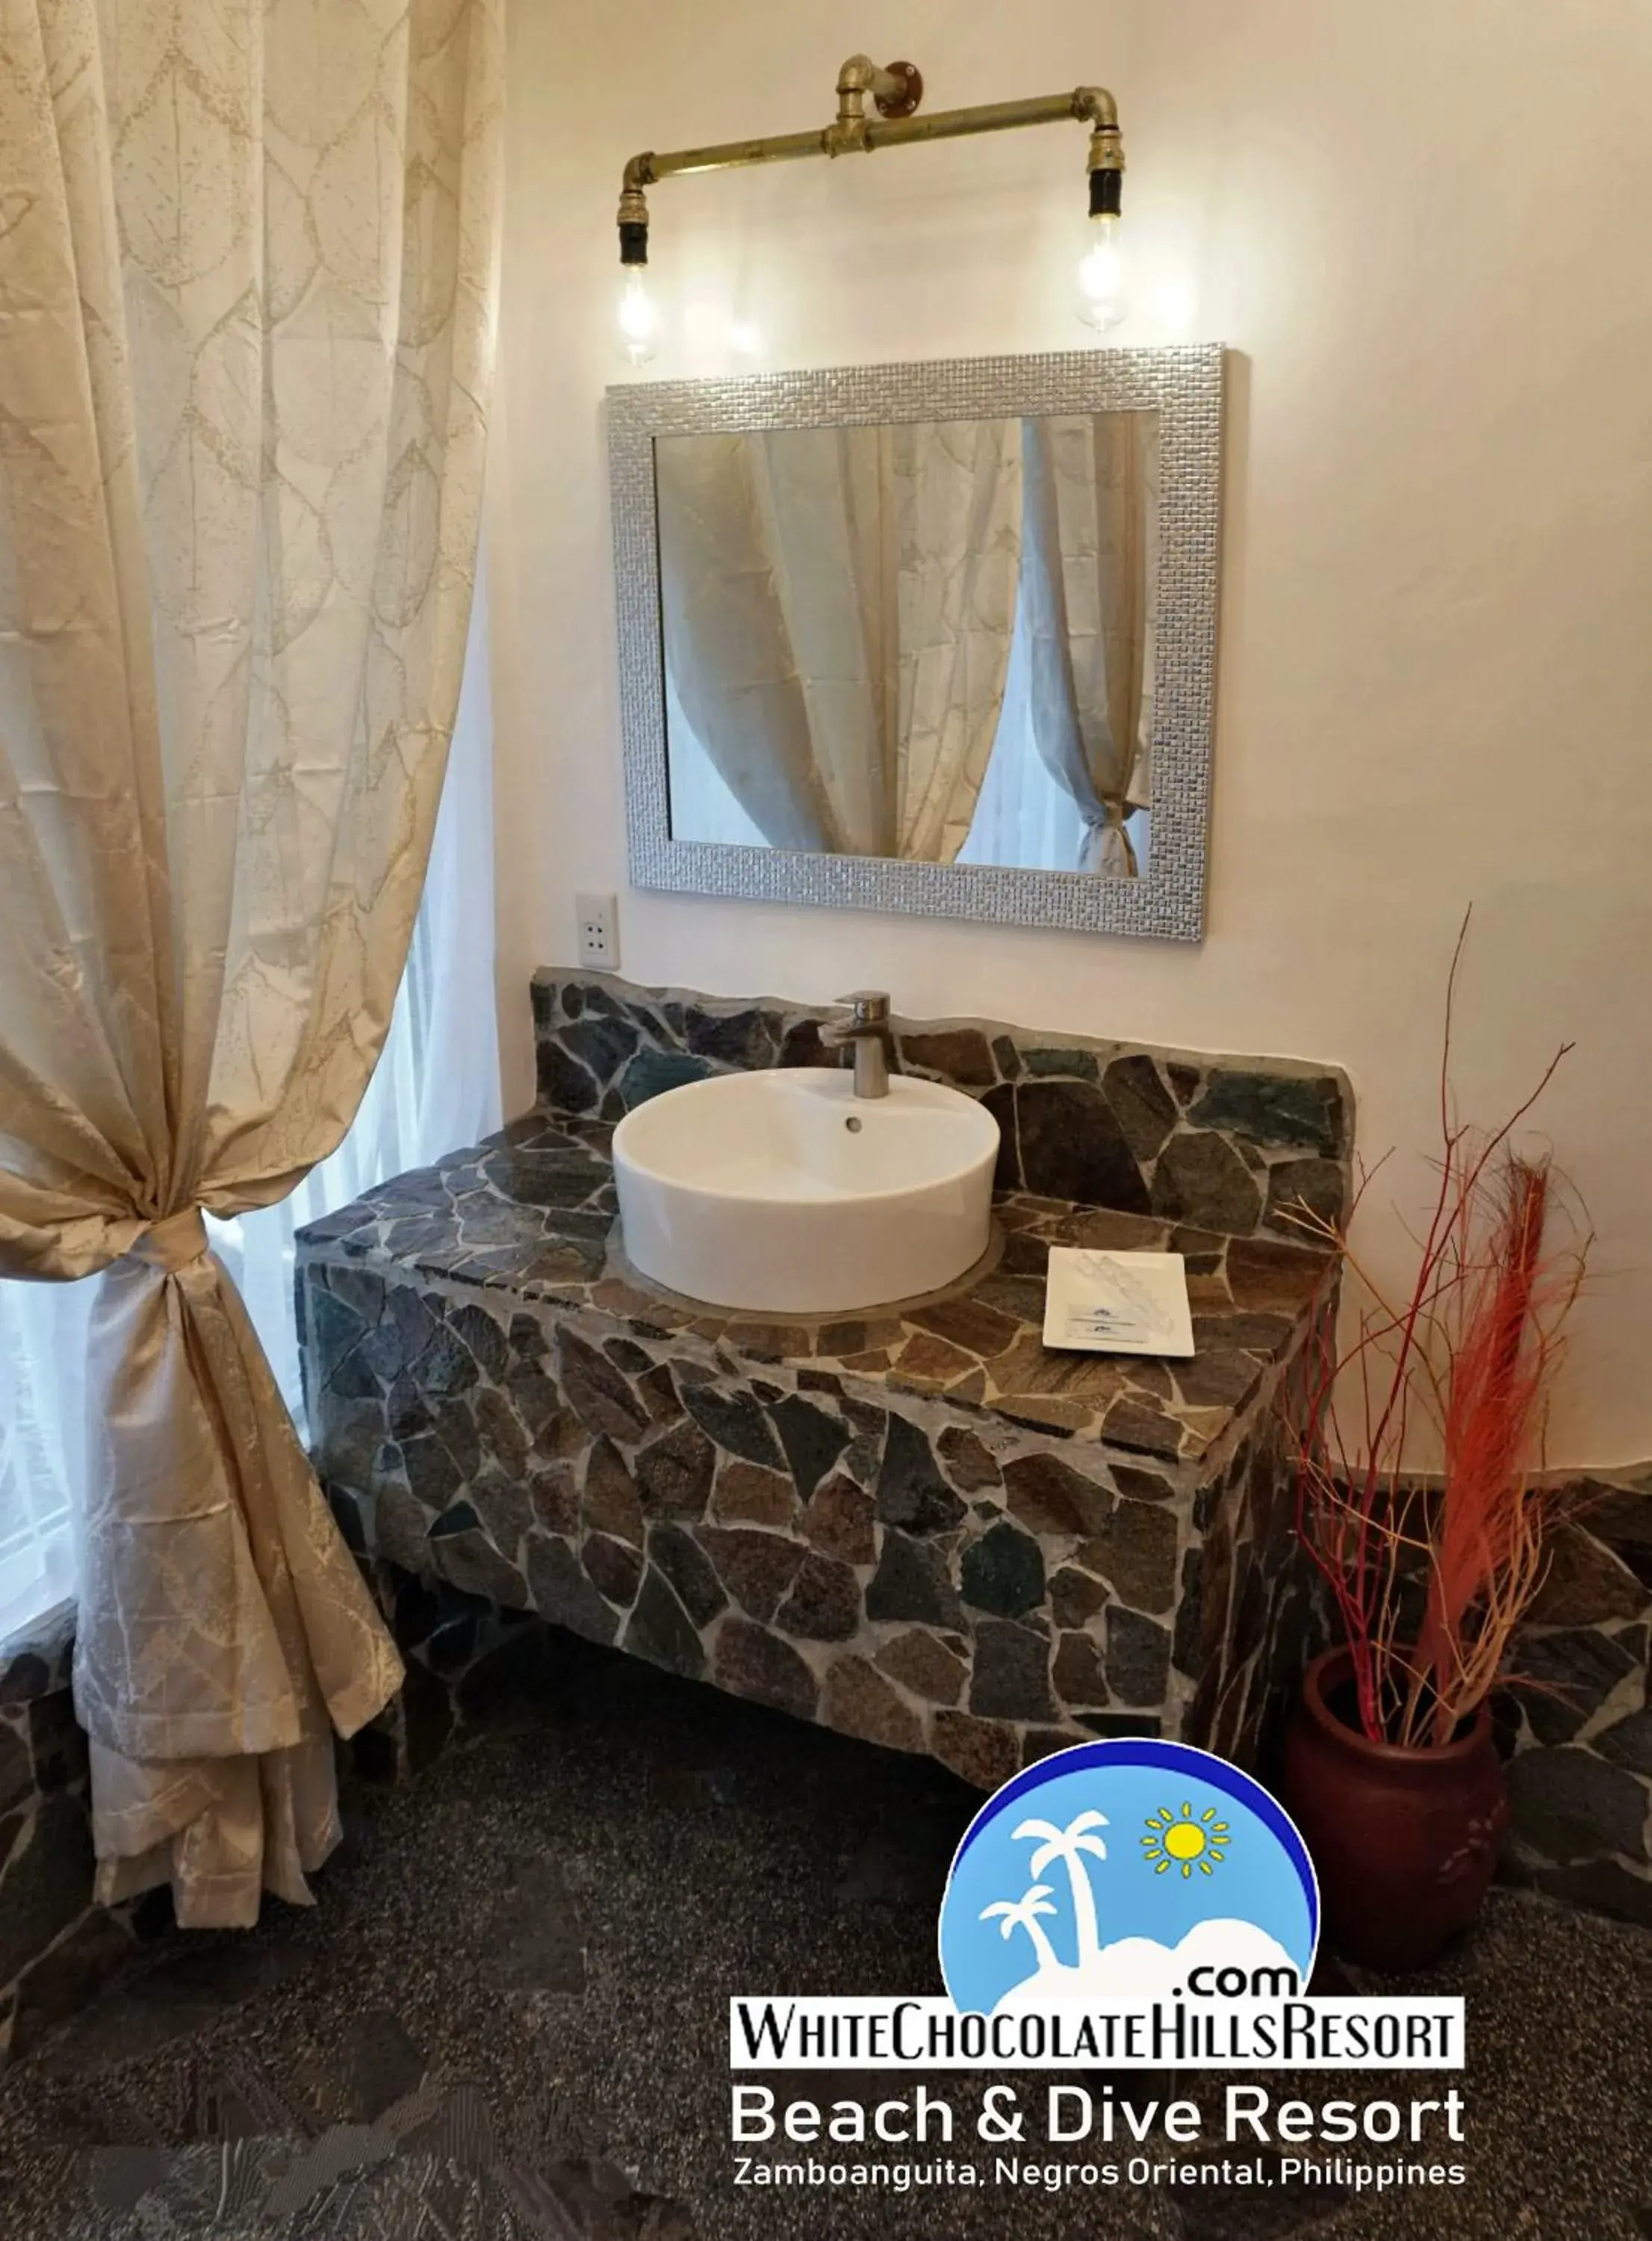 Decorative detail, Bathroom in White Chocolate Hills Resort